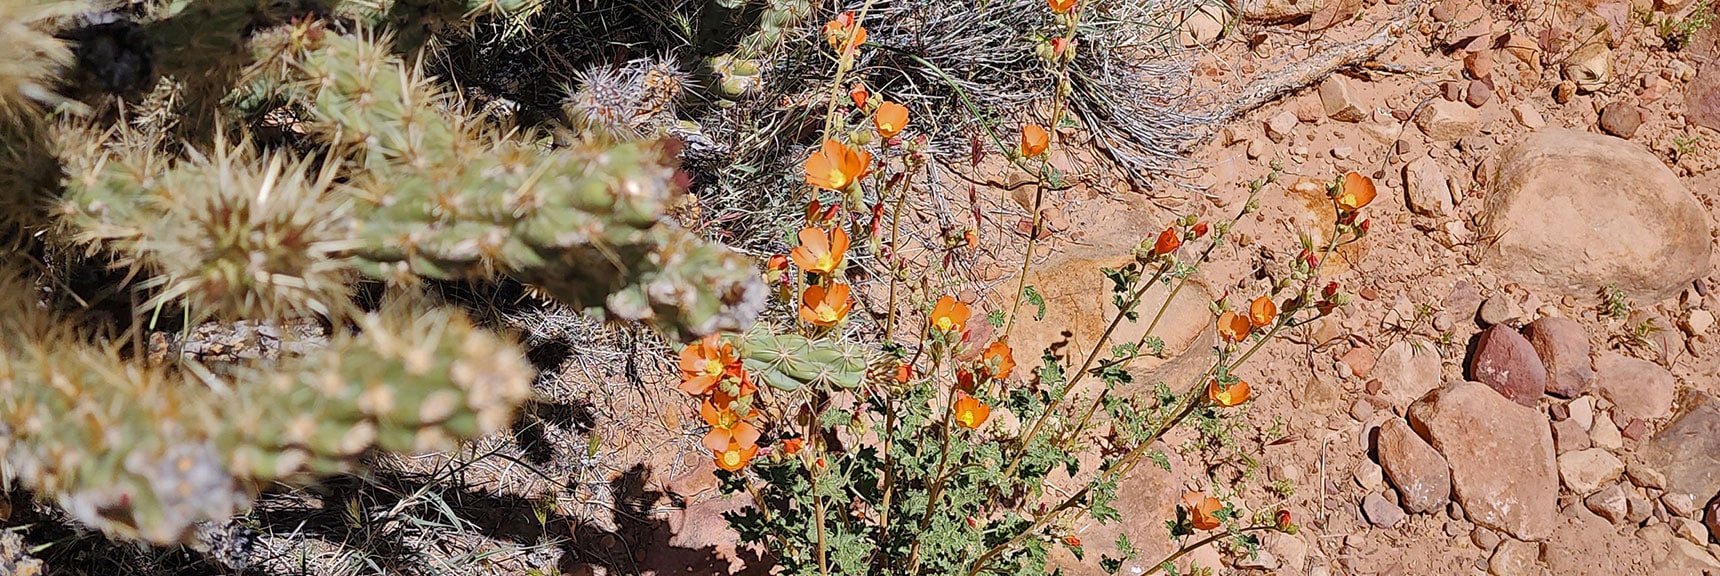 California Poppy : Annual Mojave Desert Wildflowers | Juniper Canyon | Red Rock Canyon National Conservation Area, Nevada | David Smith | LasVegasAreaTrails.com